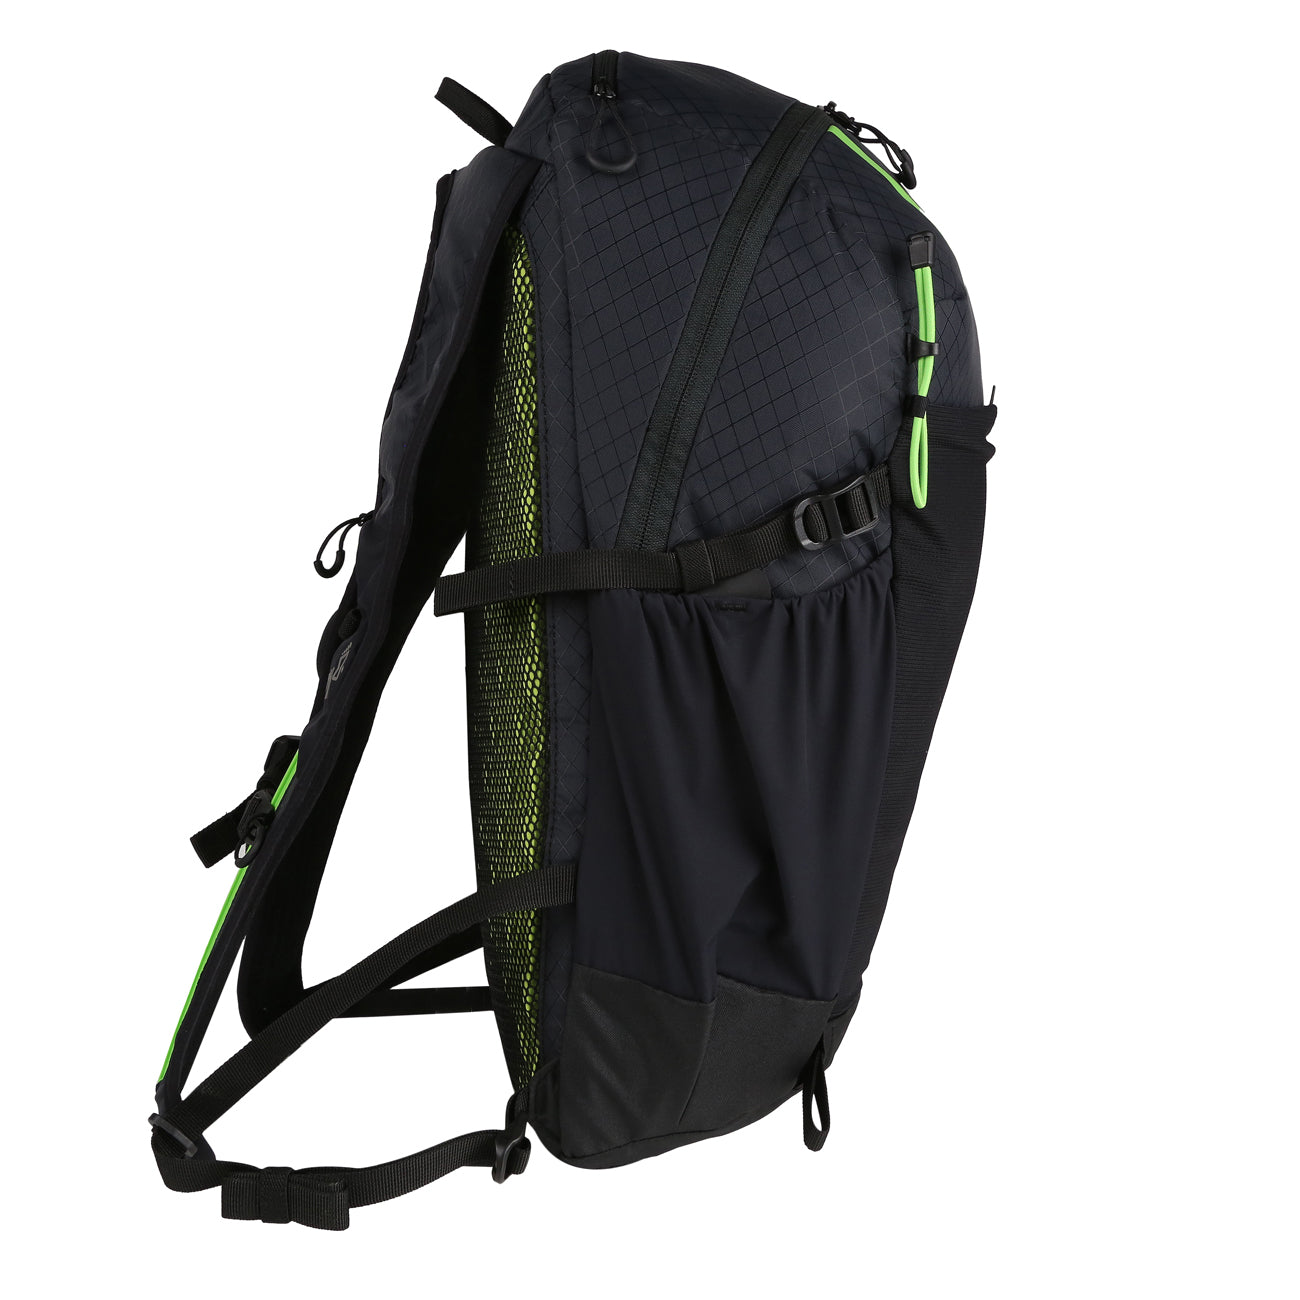 Inov-8 VentureLite 18 Backpack Black Green